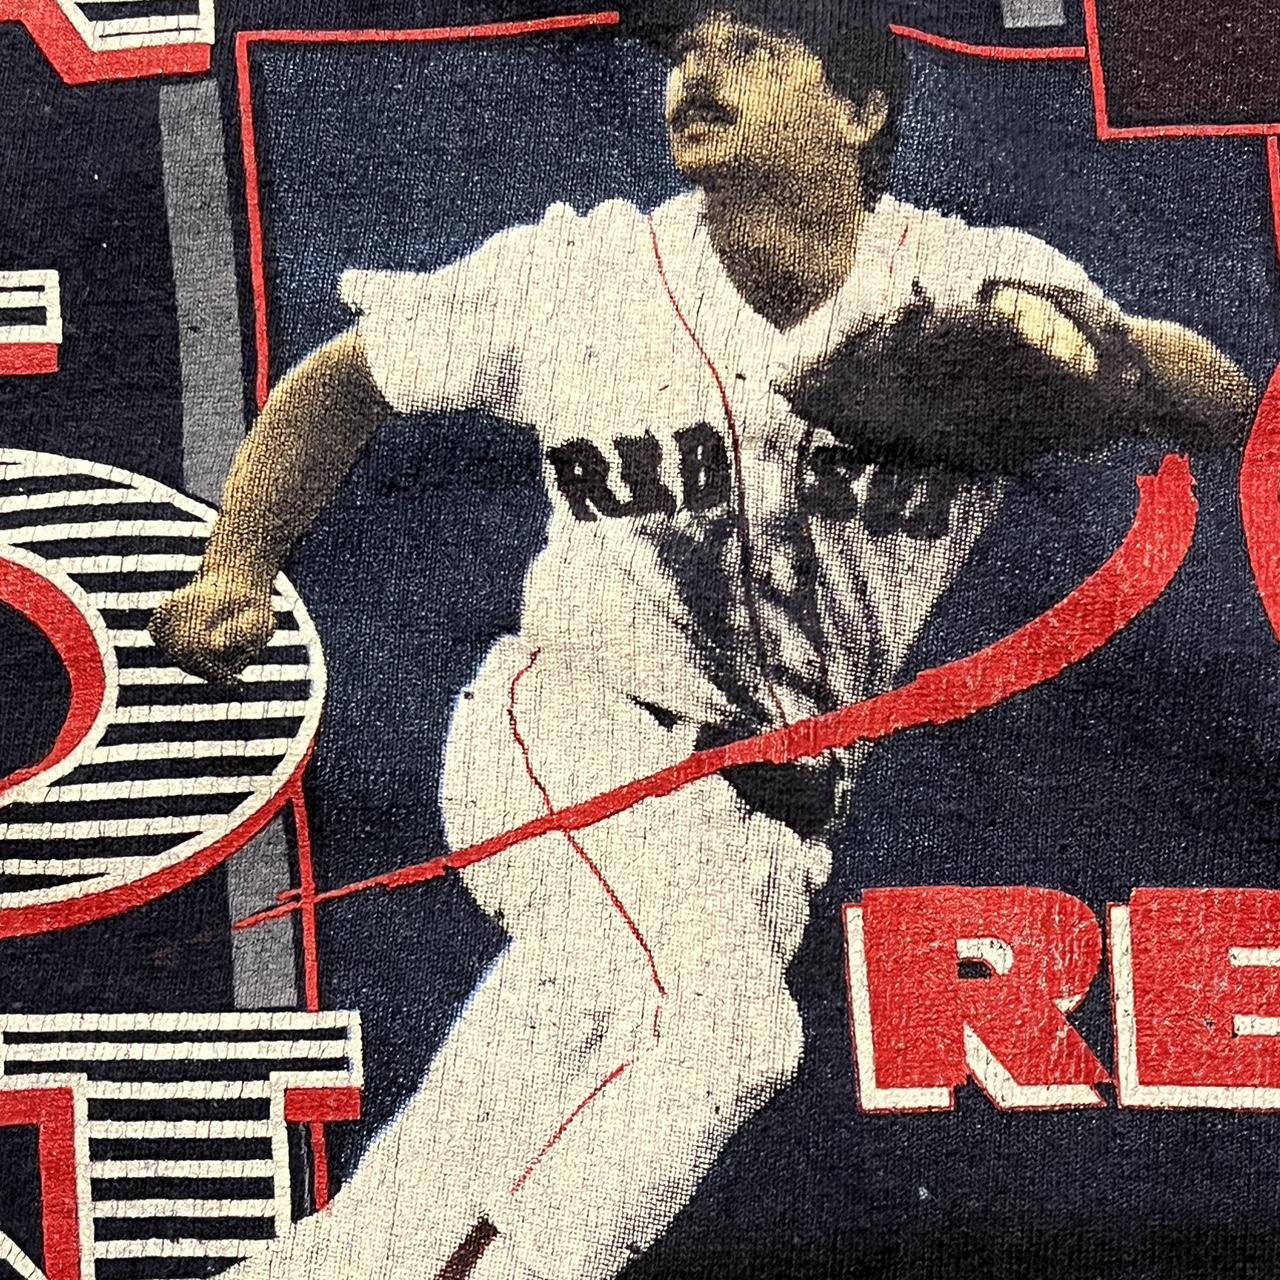 NWT Vintage Boston Red Sox Shirt Salem Sports Size: - Depop